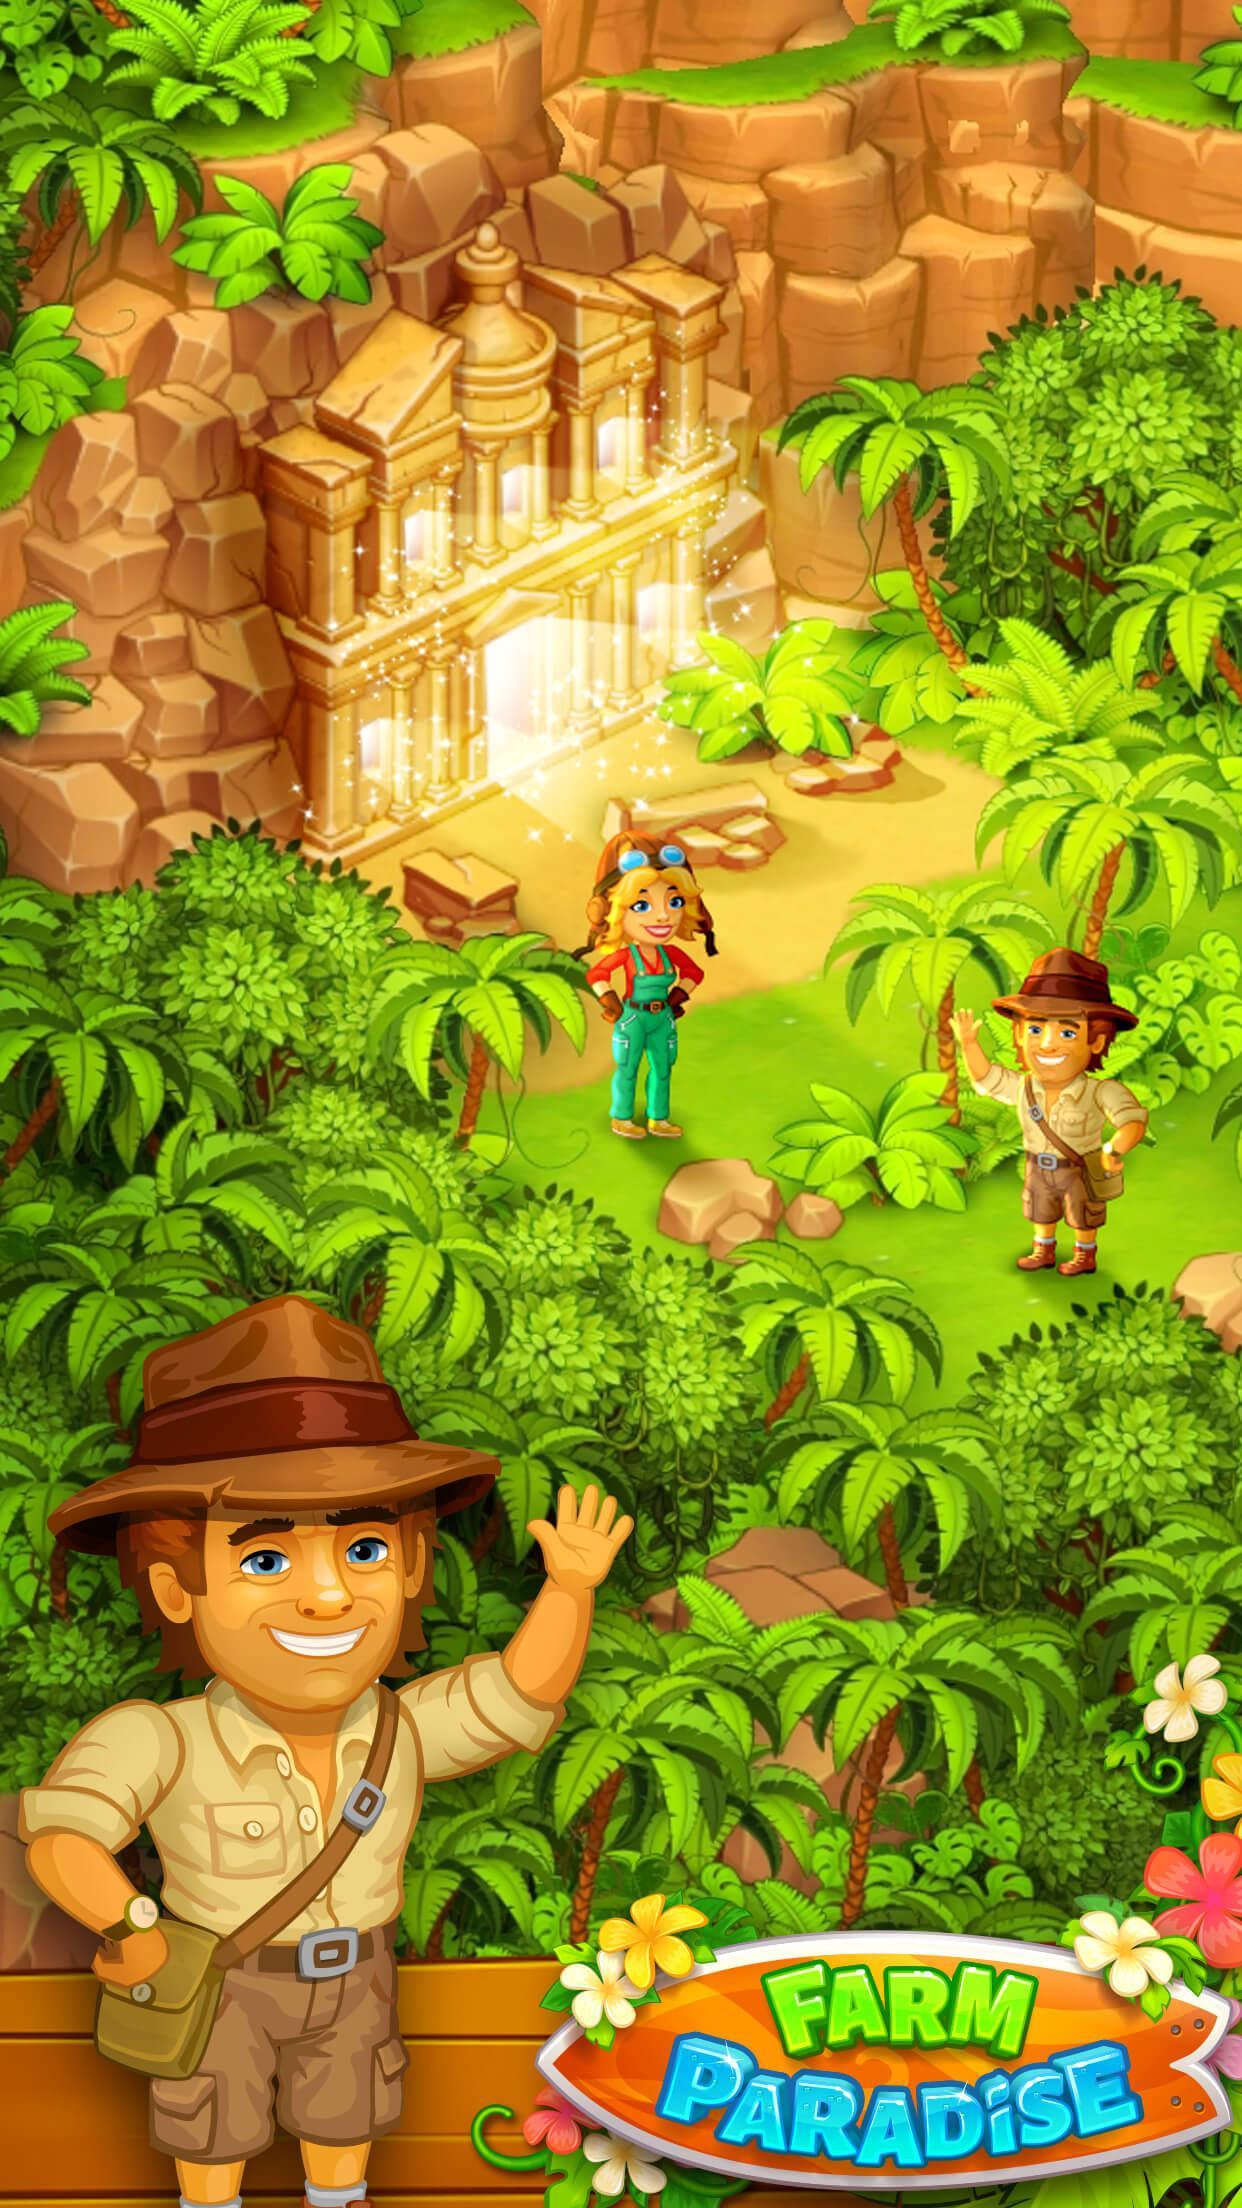 Farm Paradise Fun farm trade game at lost island 2.17 Screenshot 13